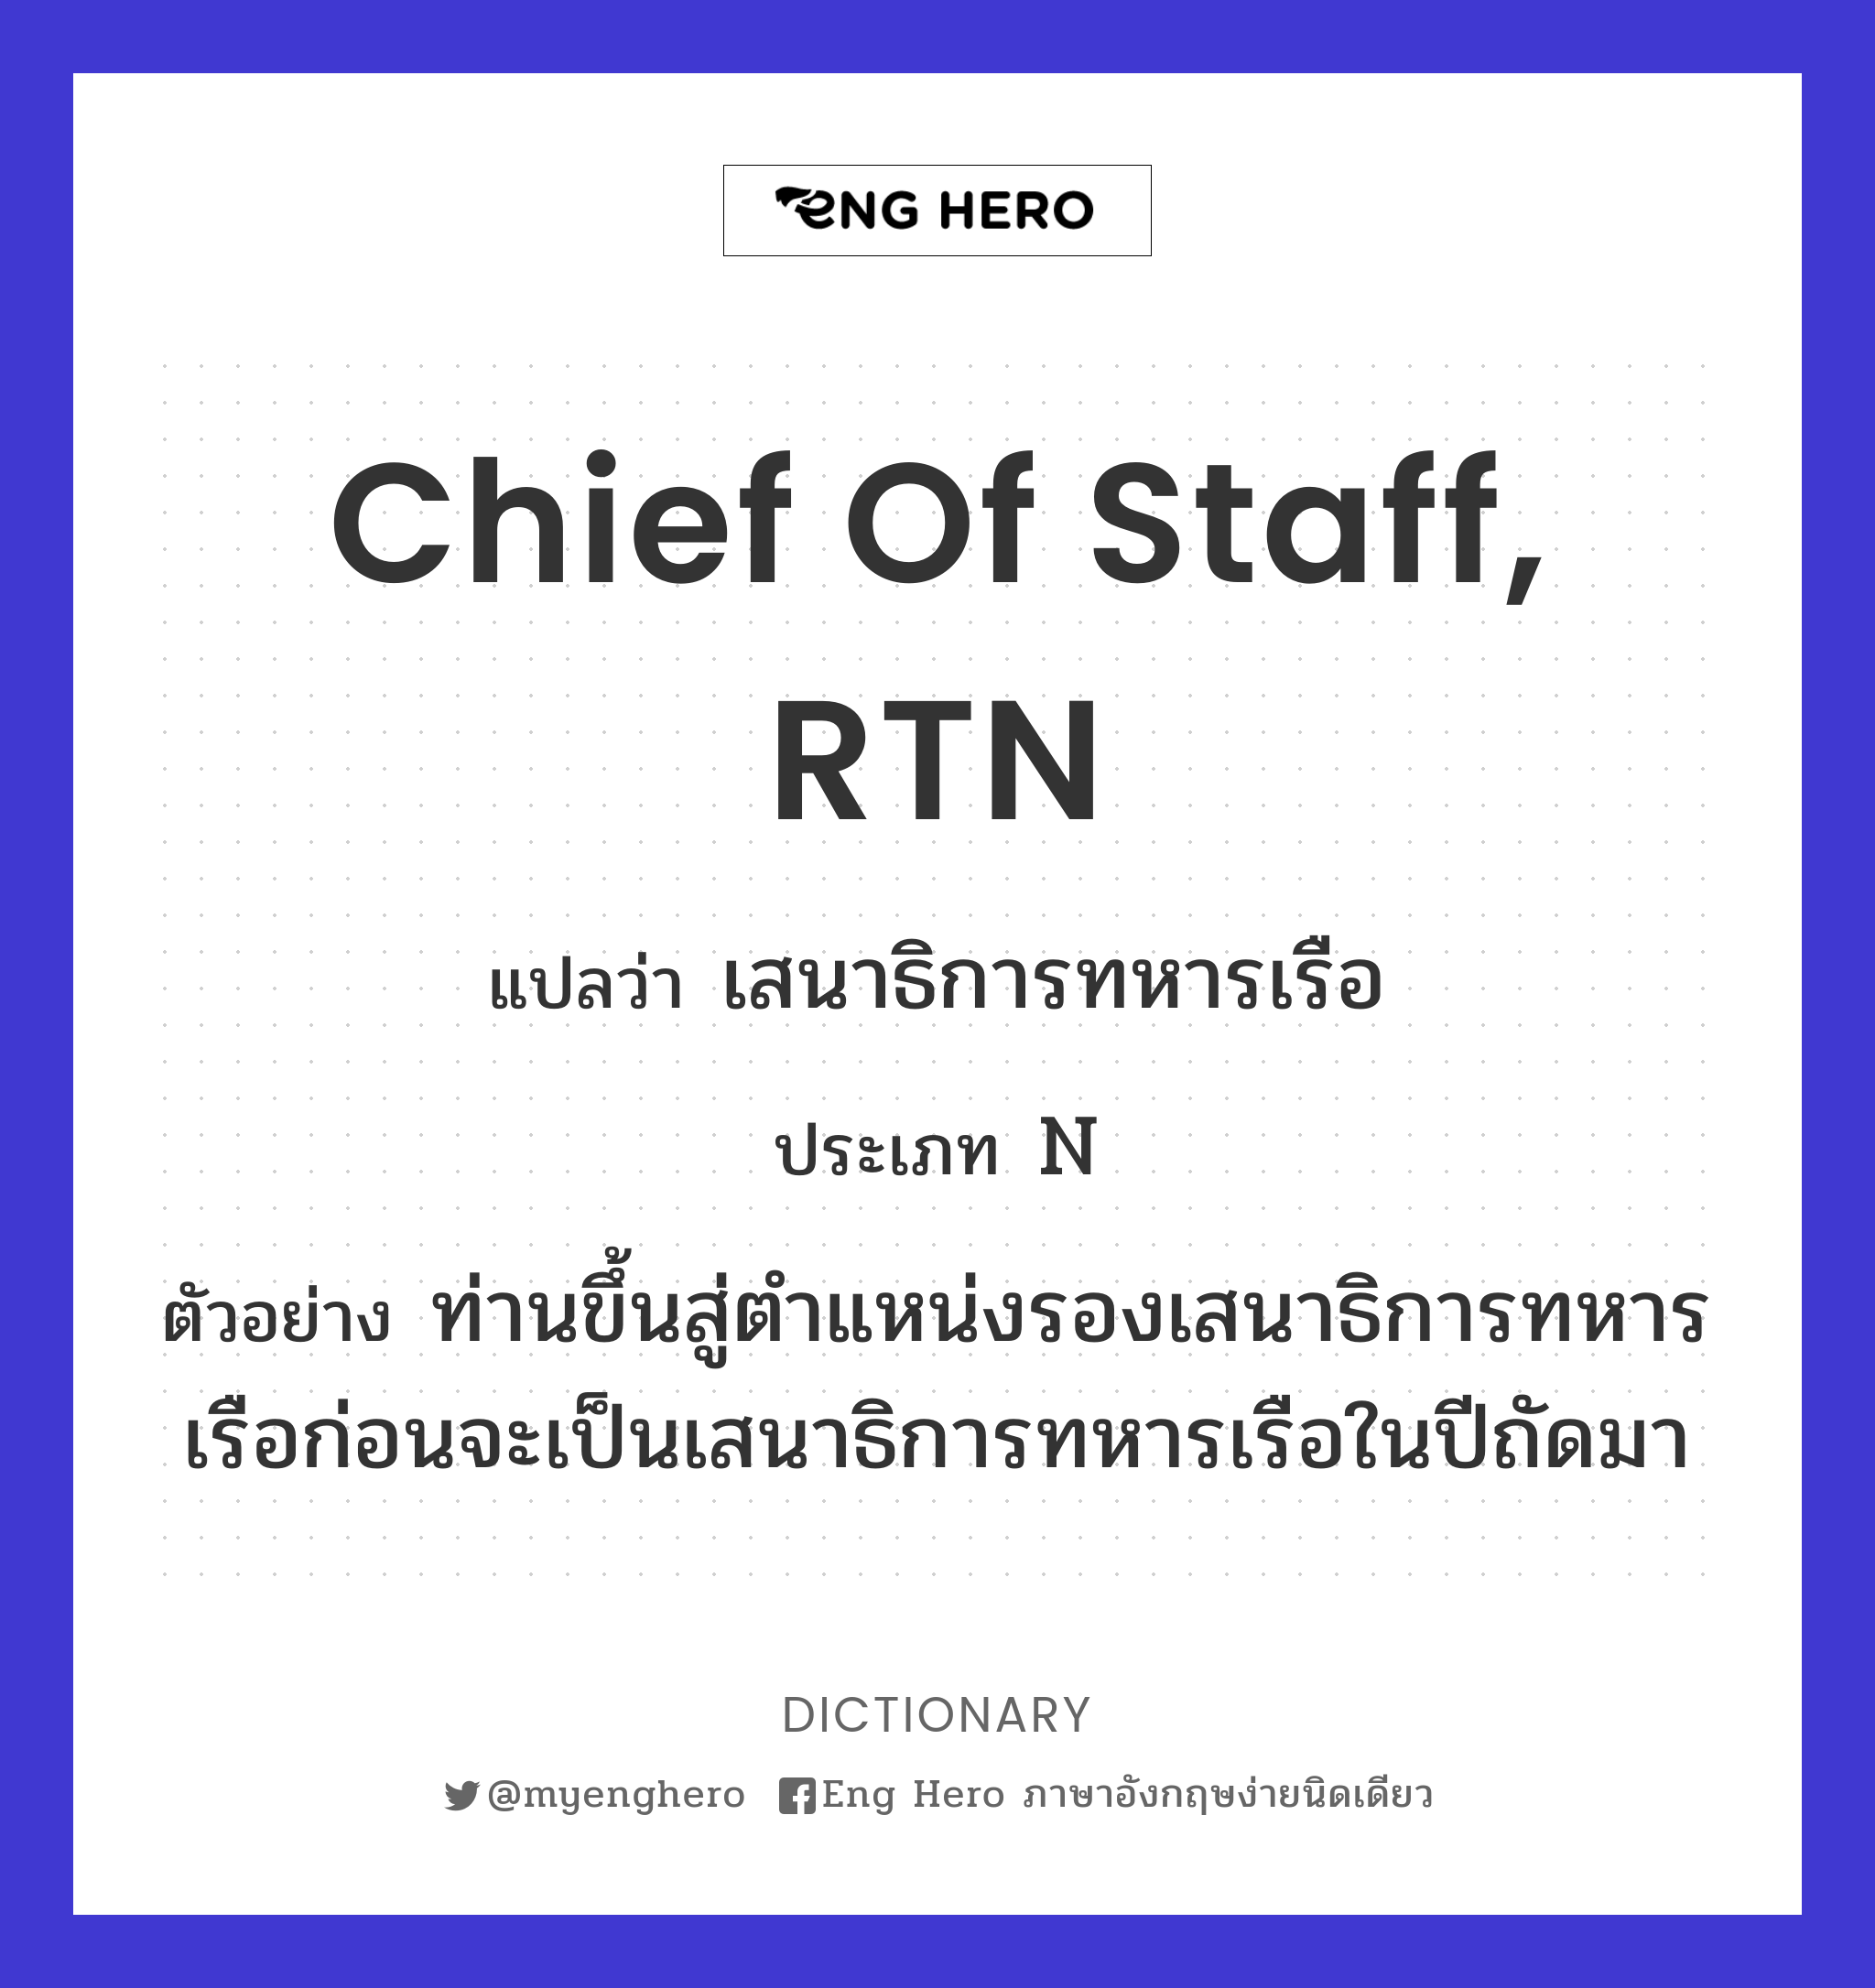 Chief of Staff, RTN